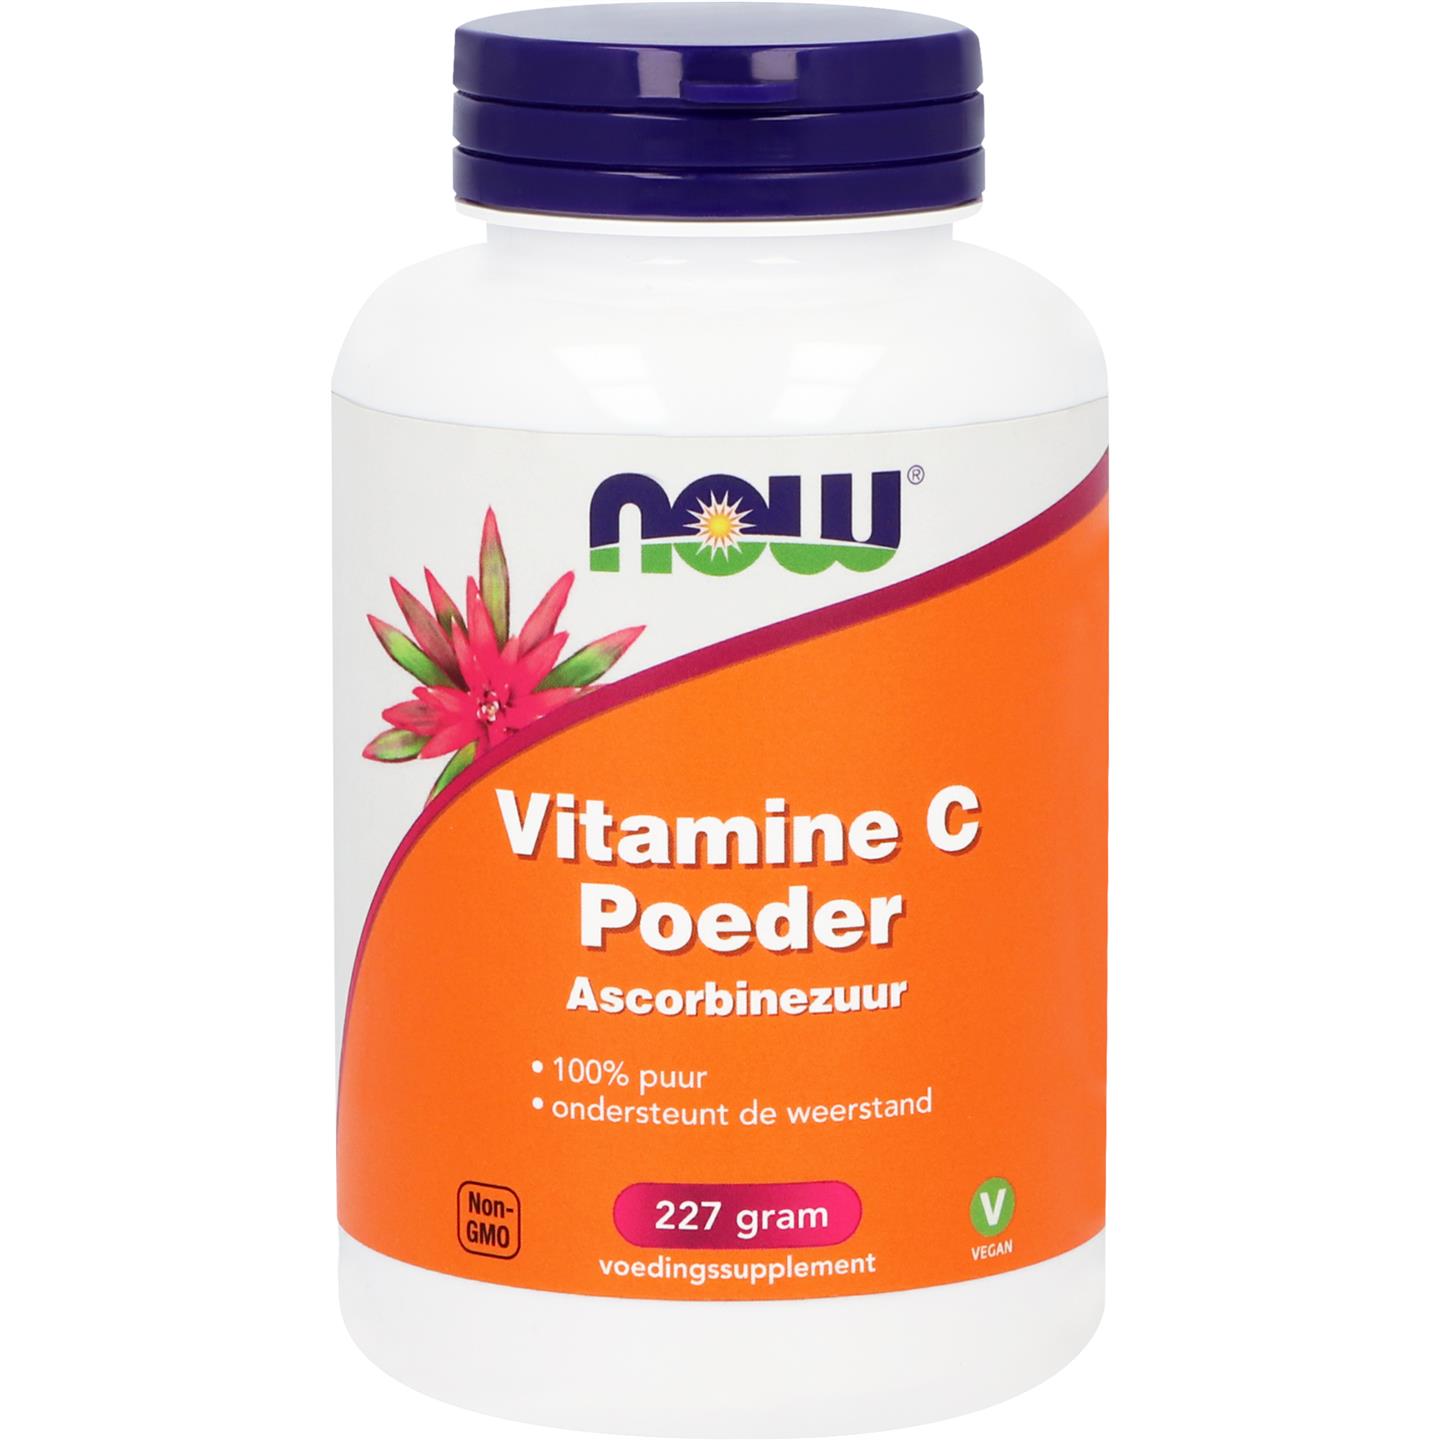 Vitamine C poeder (Ascorbinezuur)